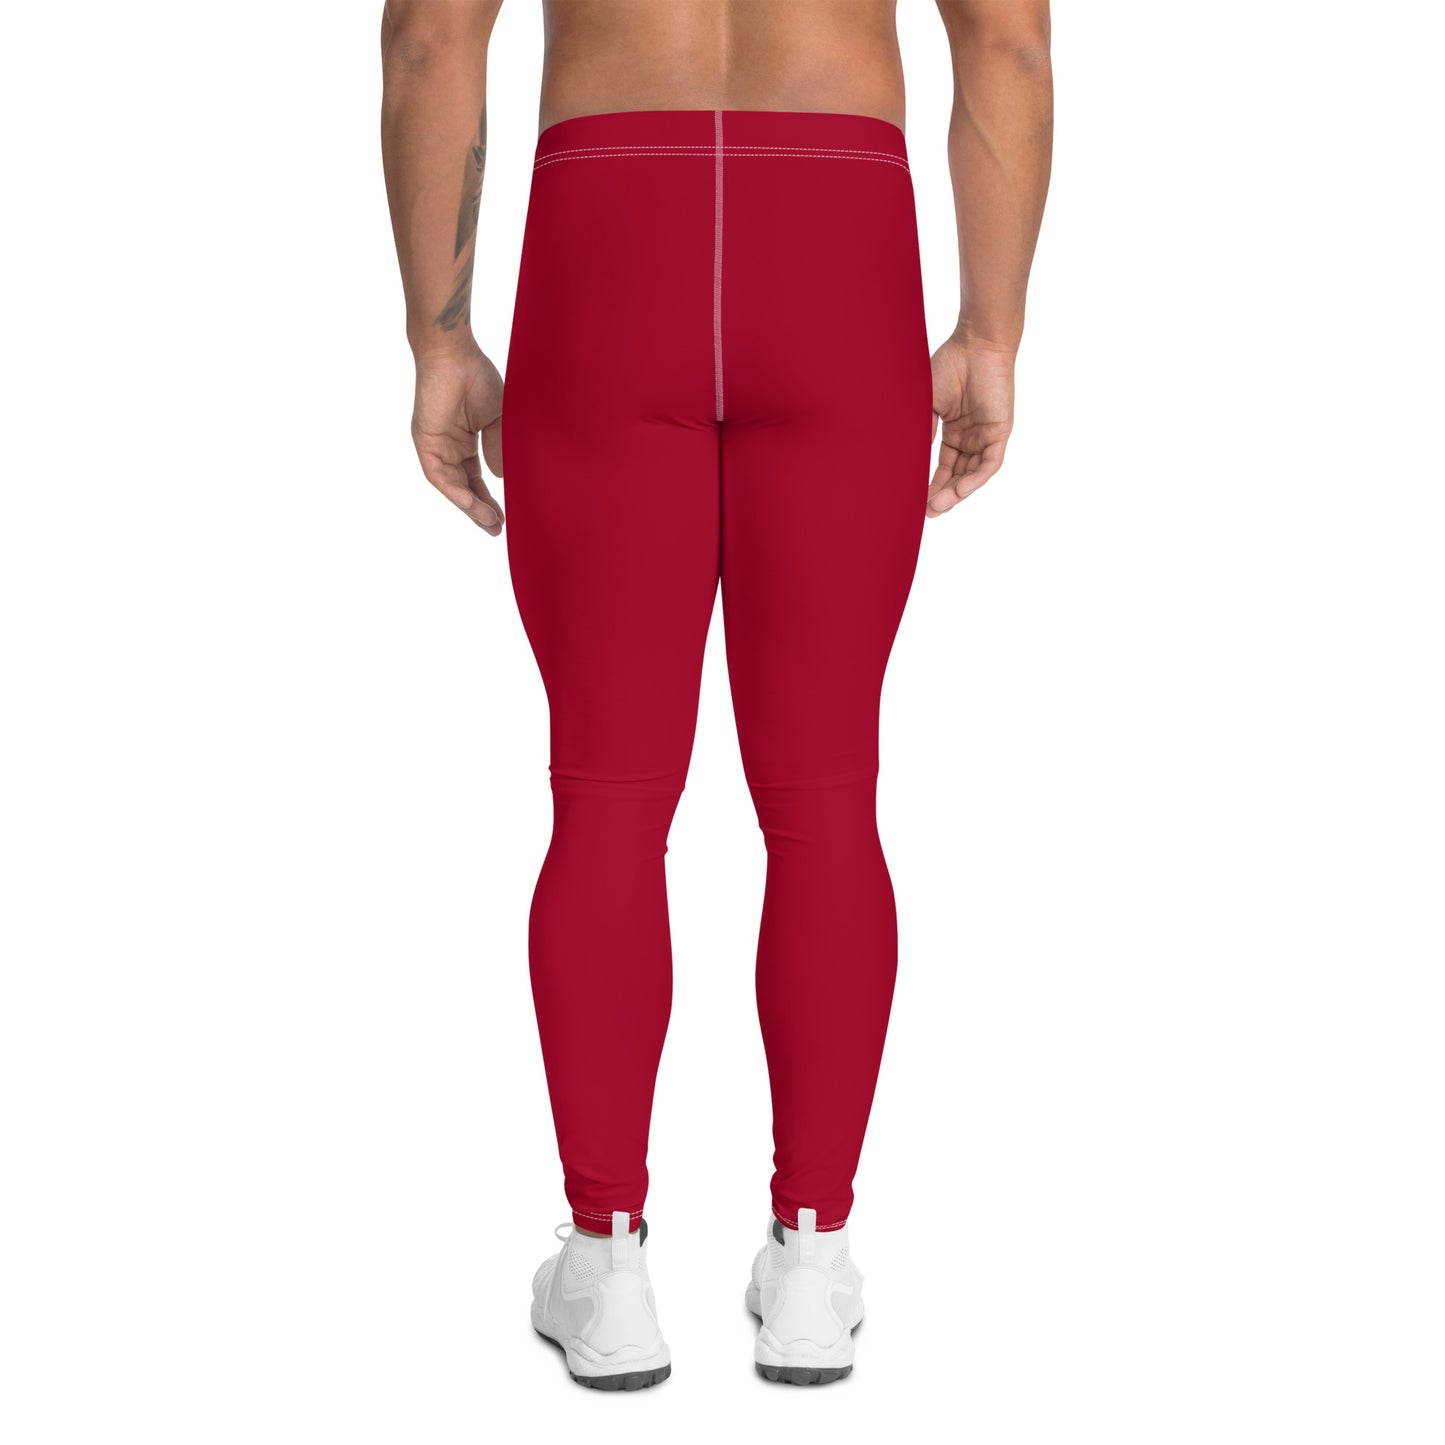 Men's Athletic Leggings (Red)